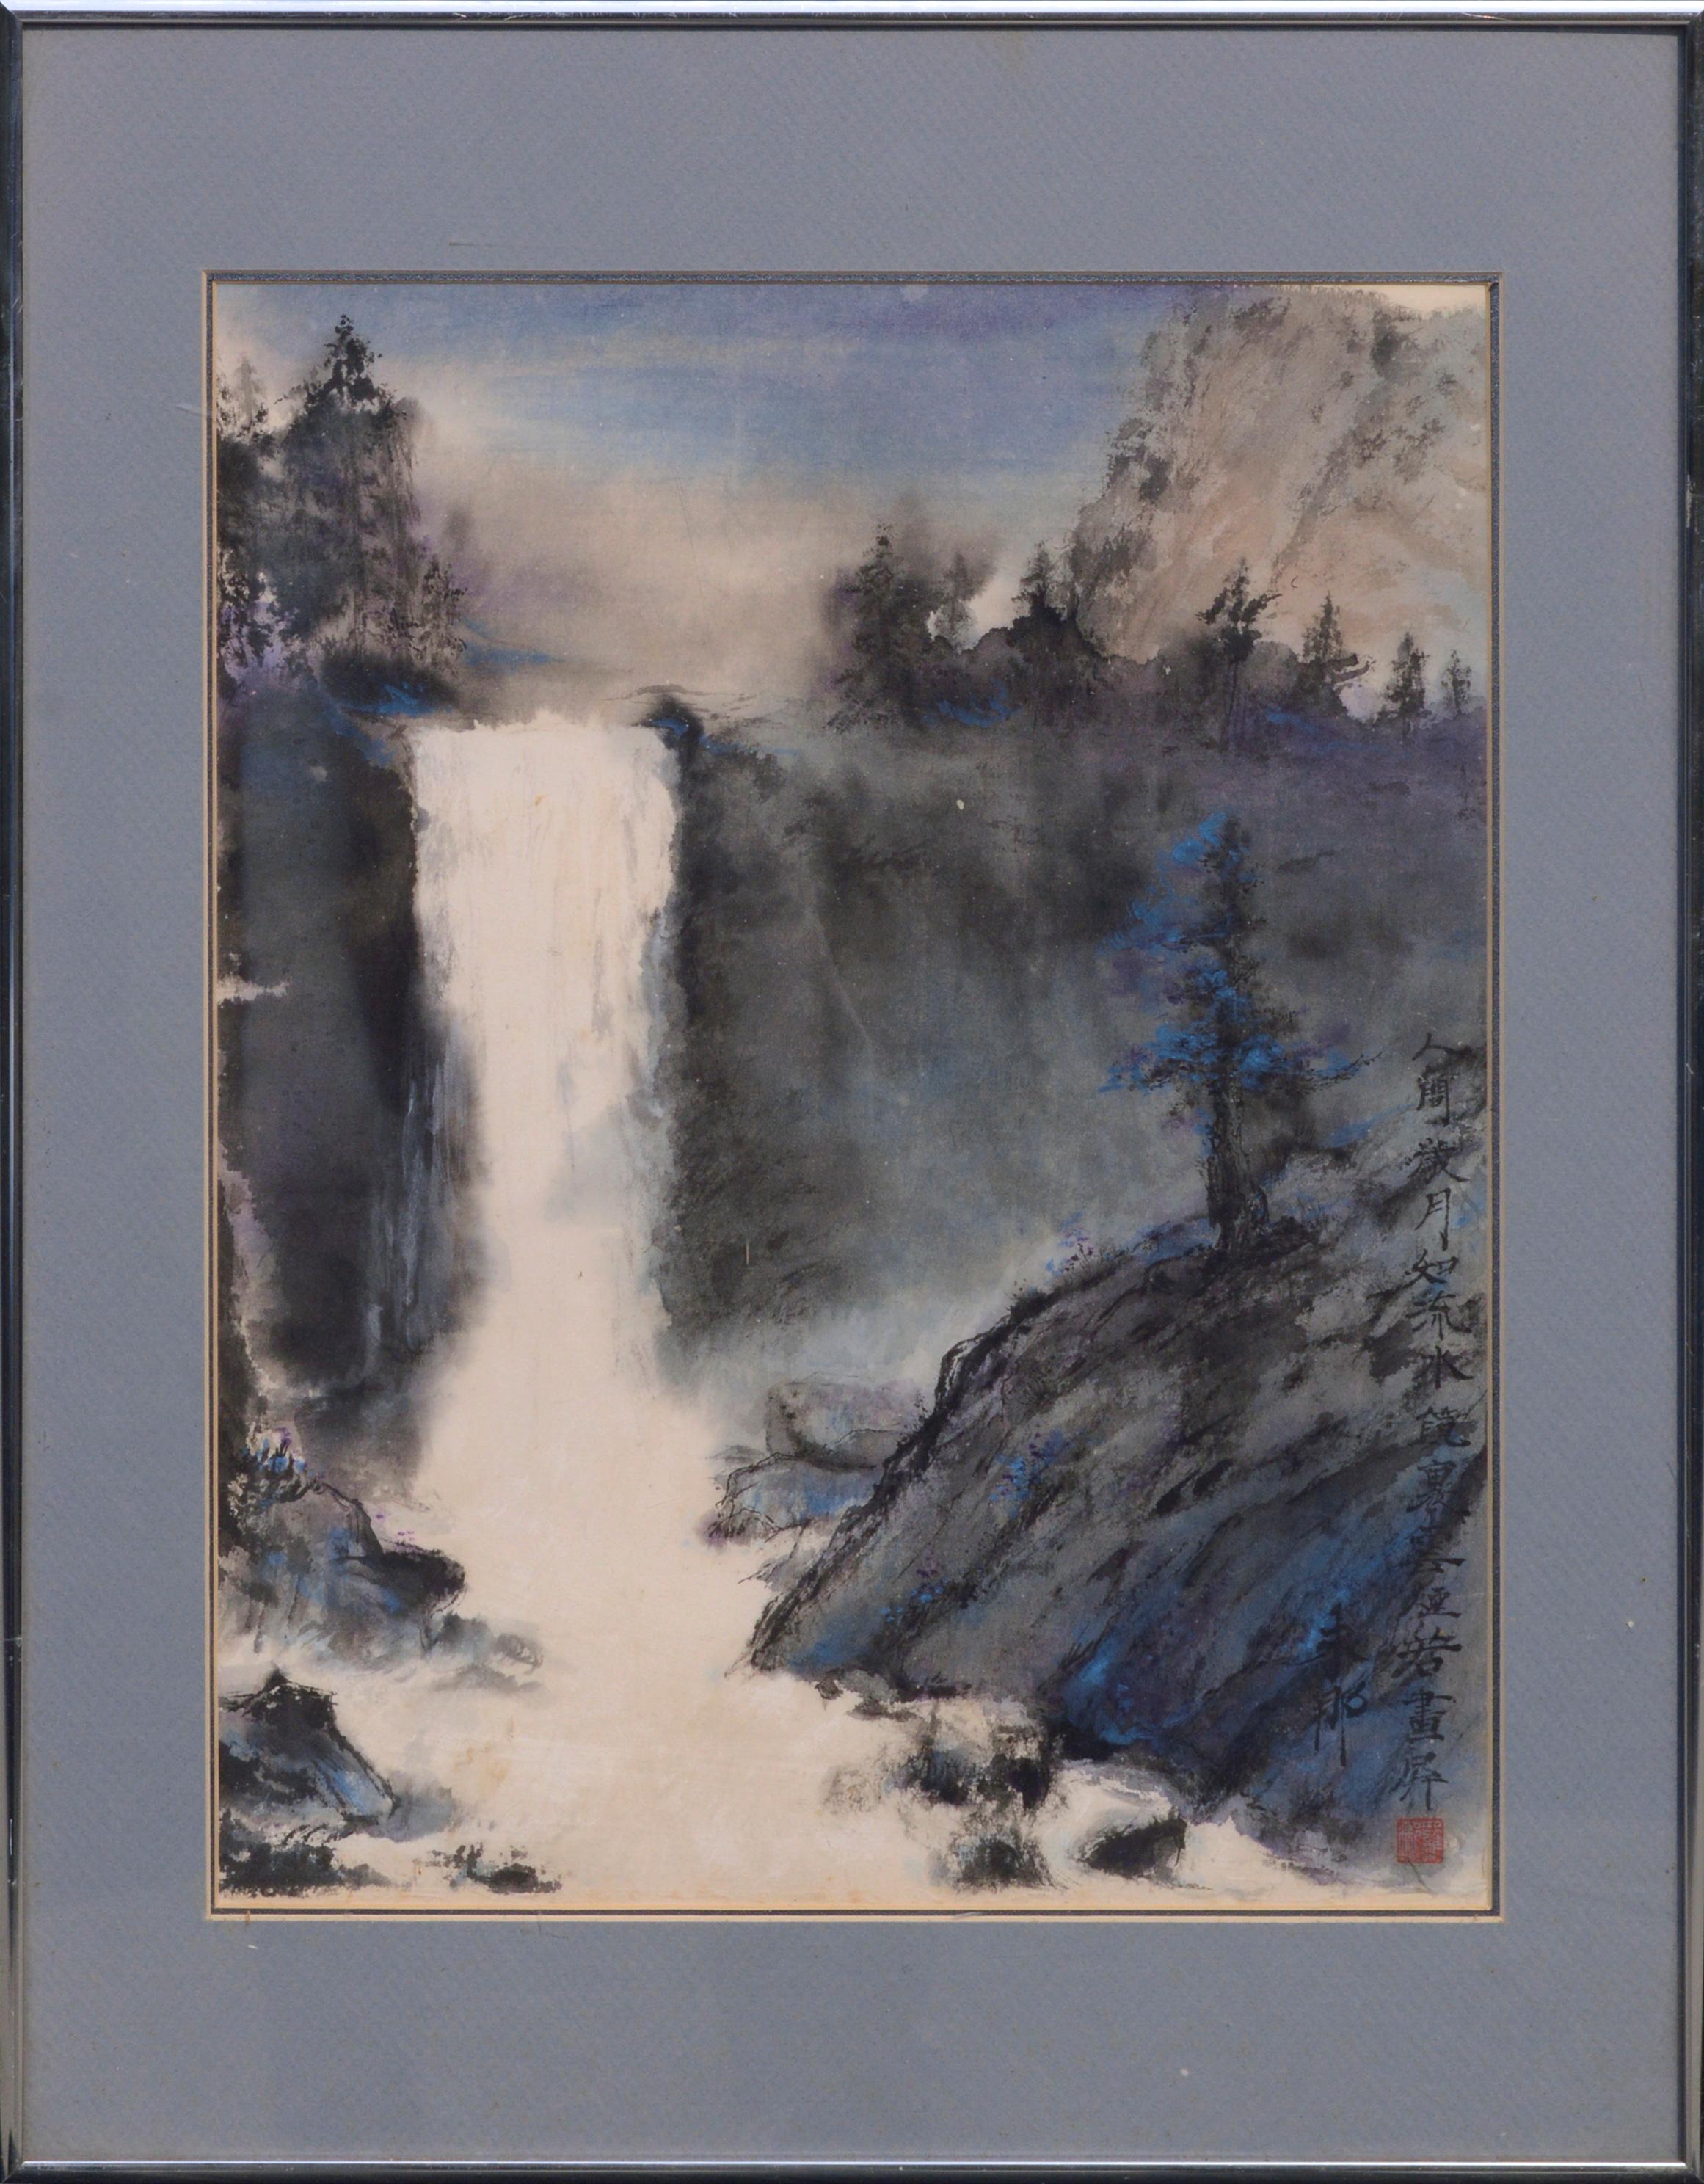 Yosemite Mist Trail, Vernal Falls Waterfall Landscape Watercolor on Rice Paper